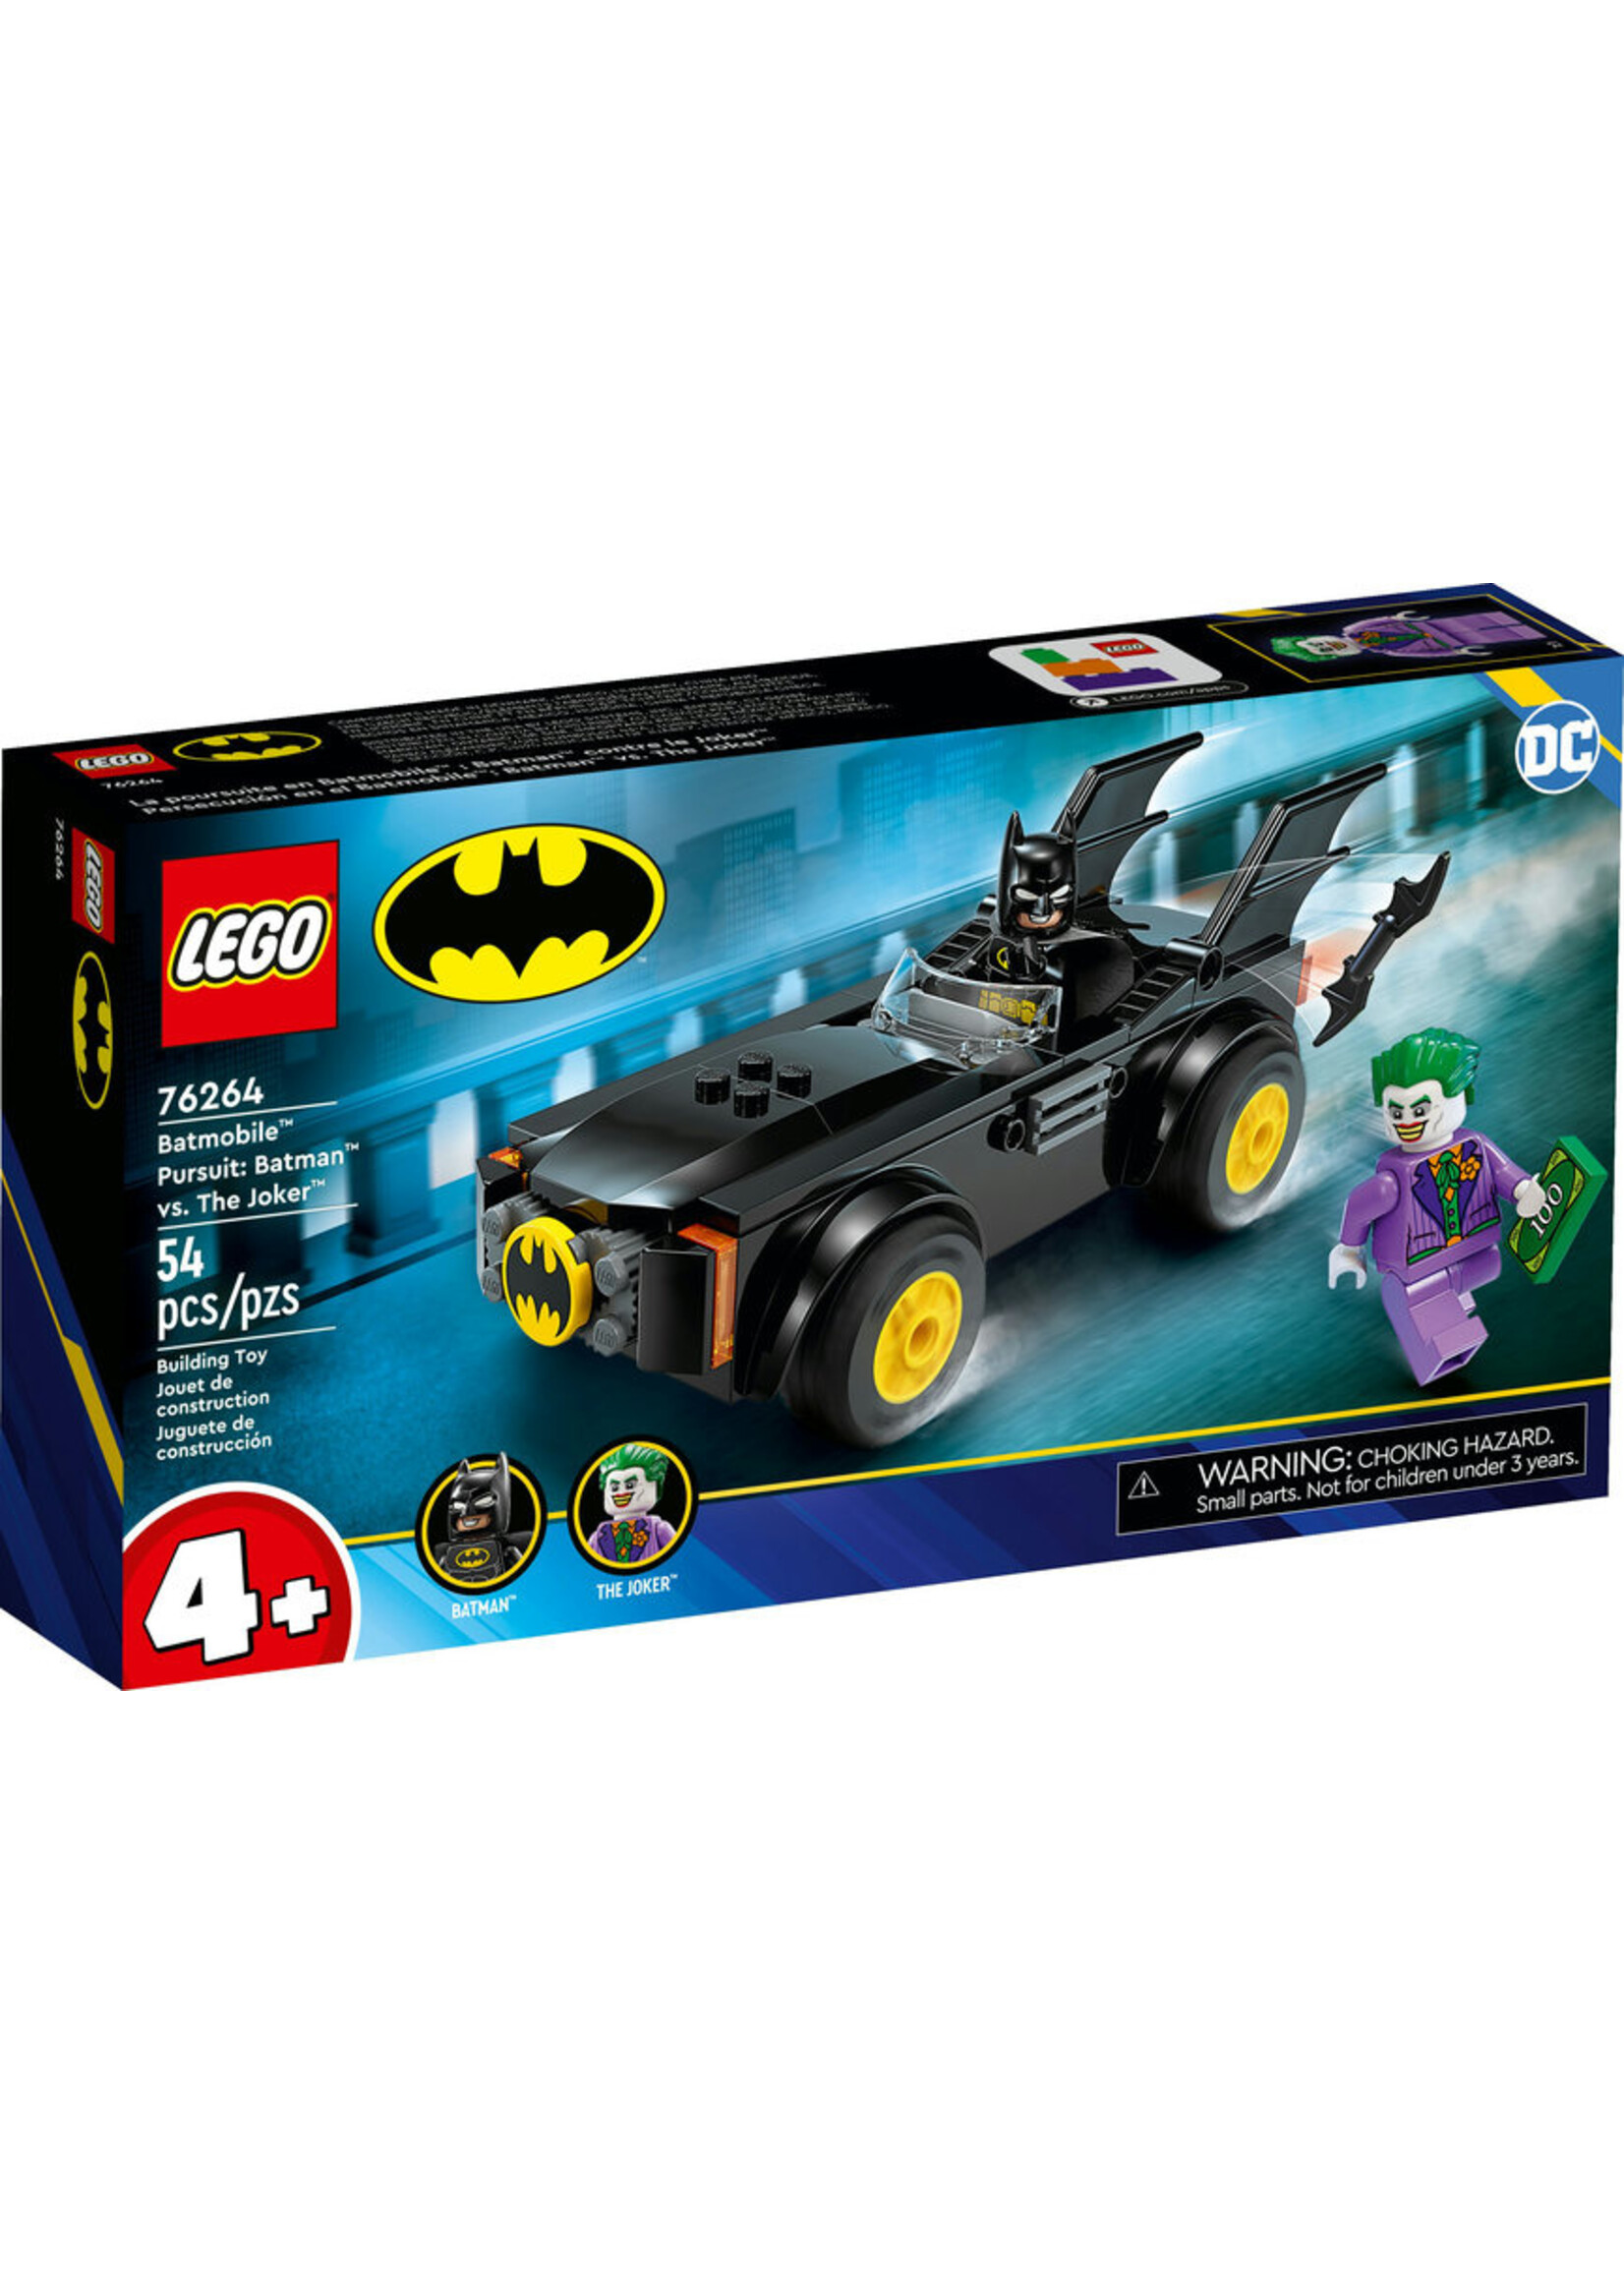 LEGO 76264 - Batmobile Pursuit: Batman vs The Joker